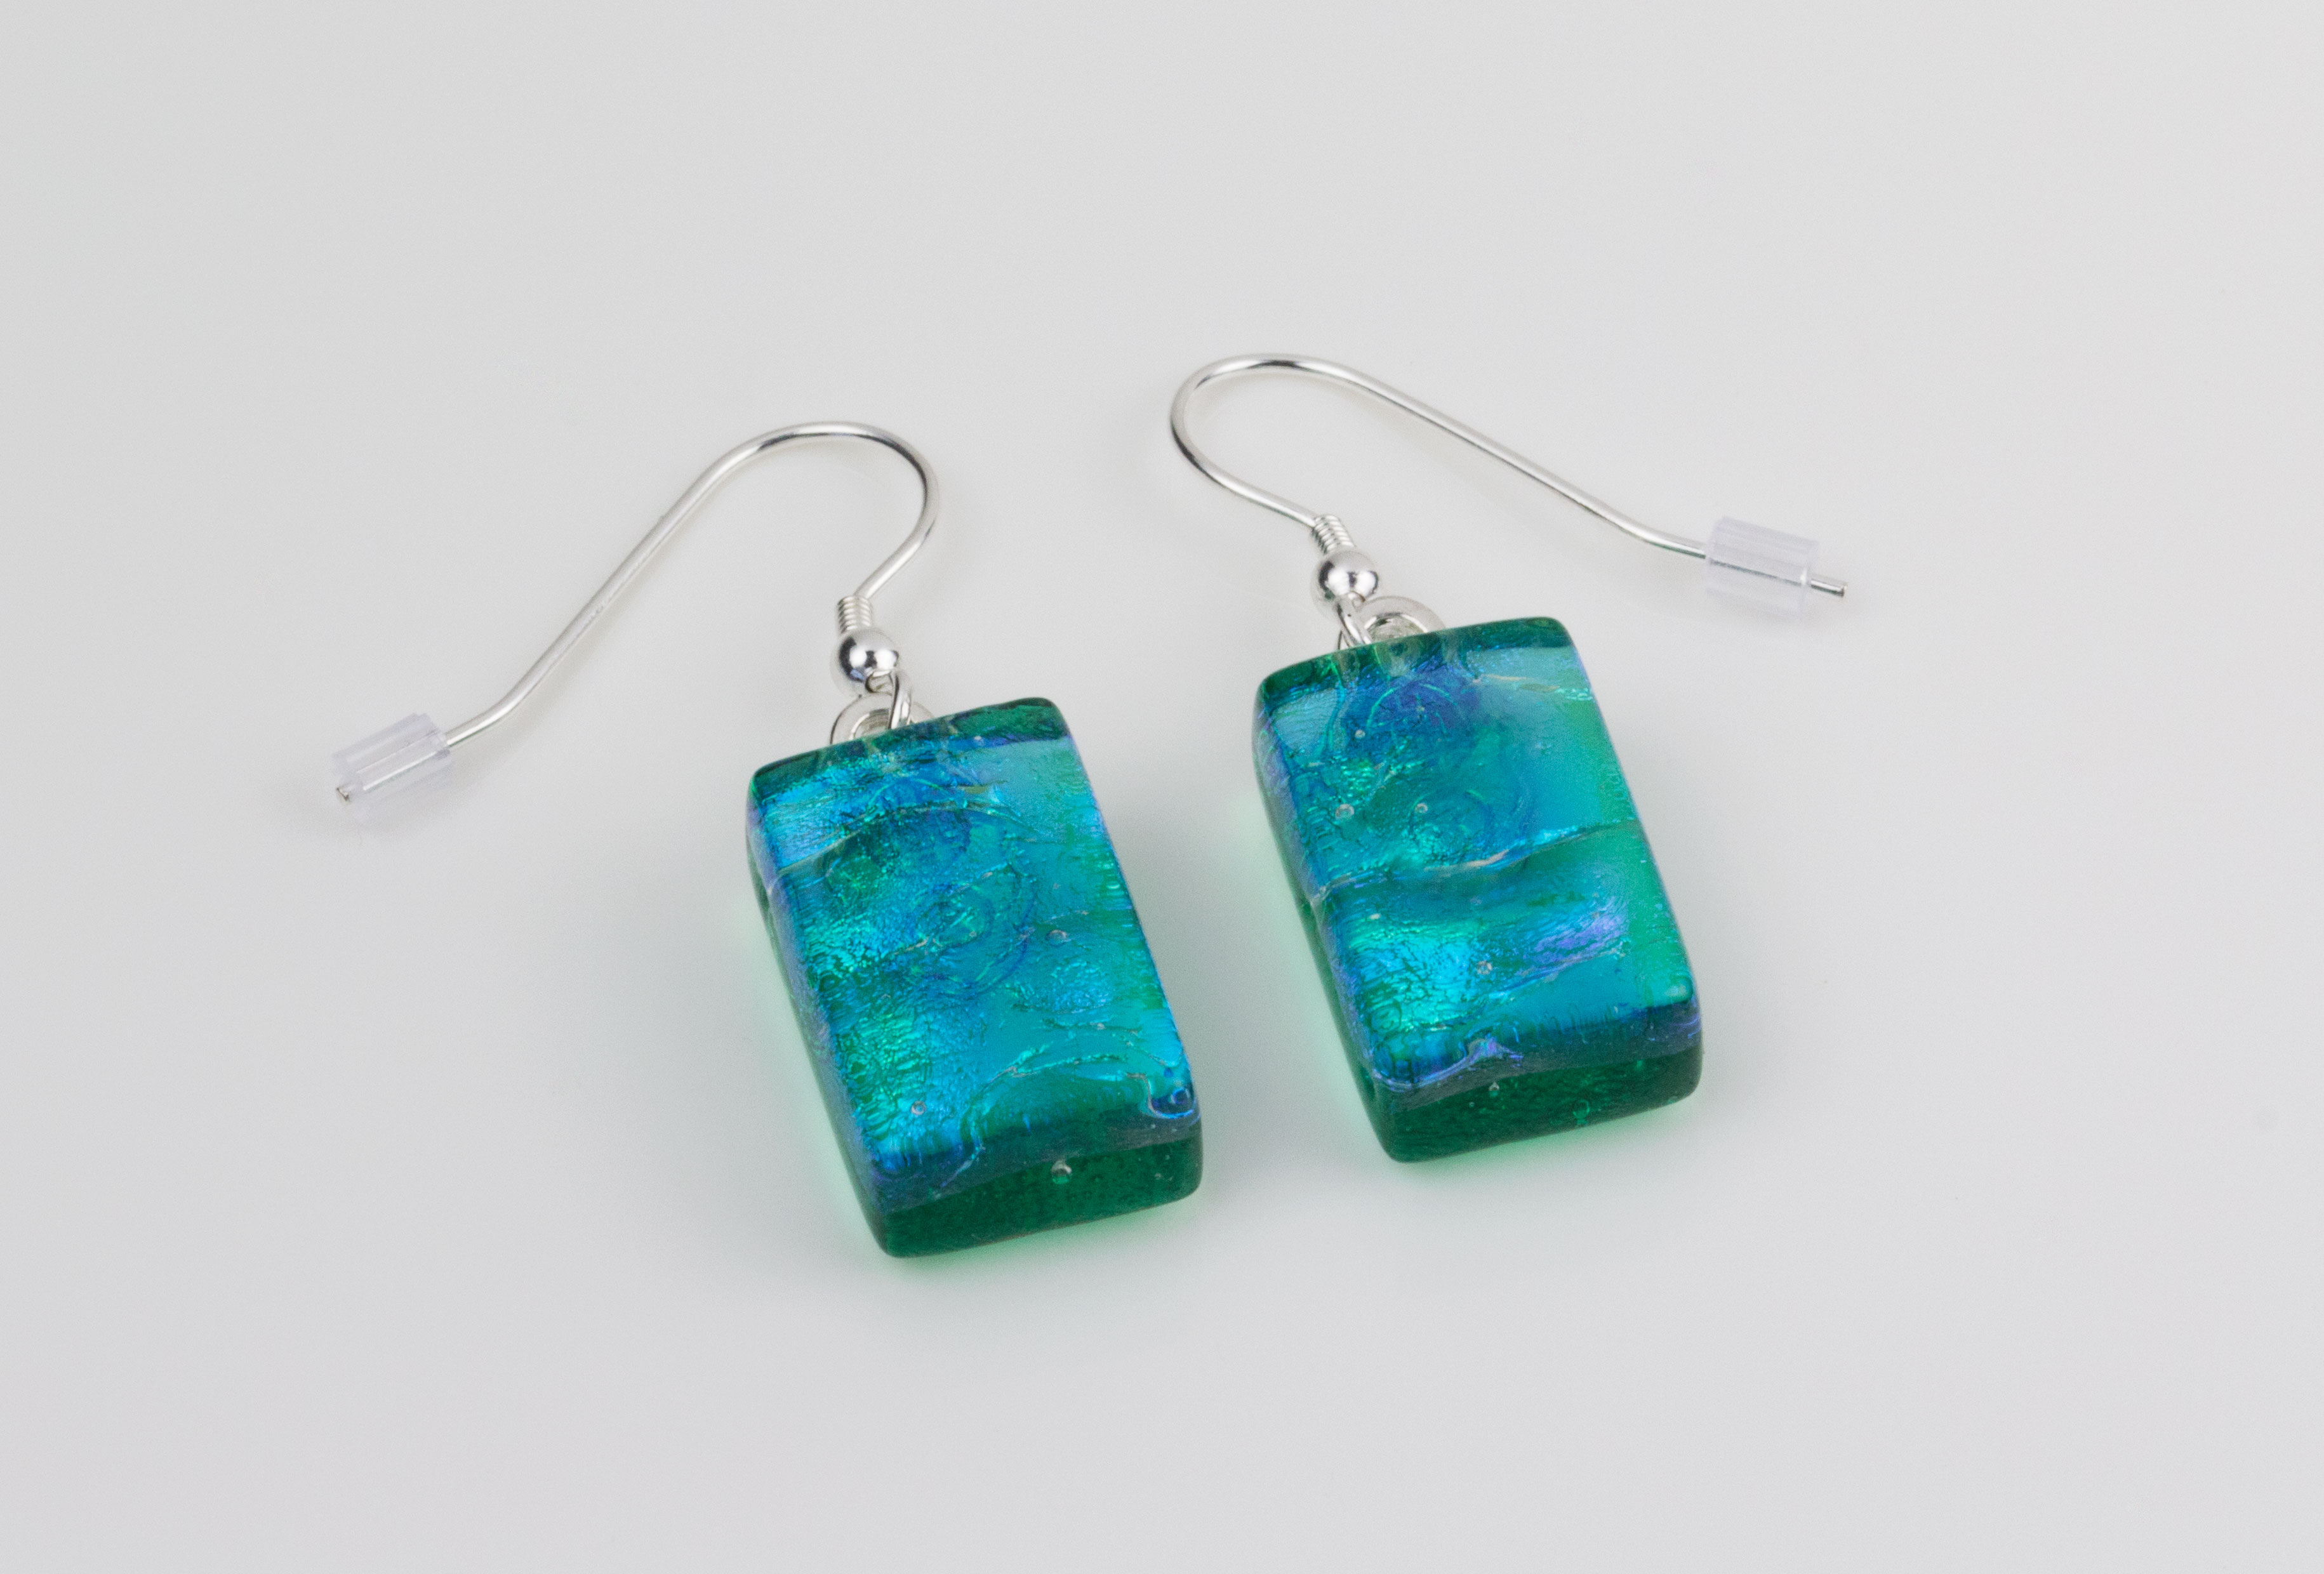 Dichroic glass jewellery, glass drop earrings, emerald green glass earrings with ripple, art glass earrings, handmade in Shropshire, sterling silver hooks